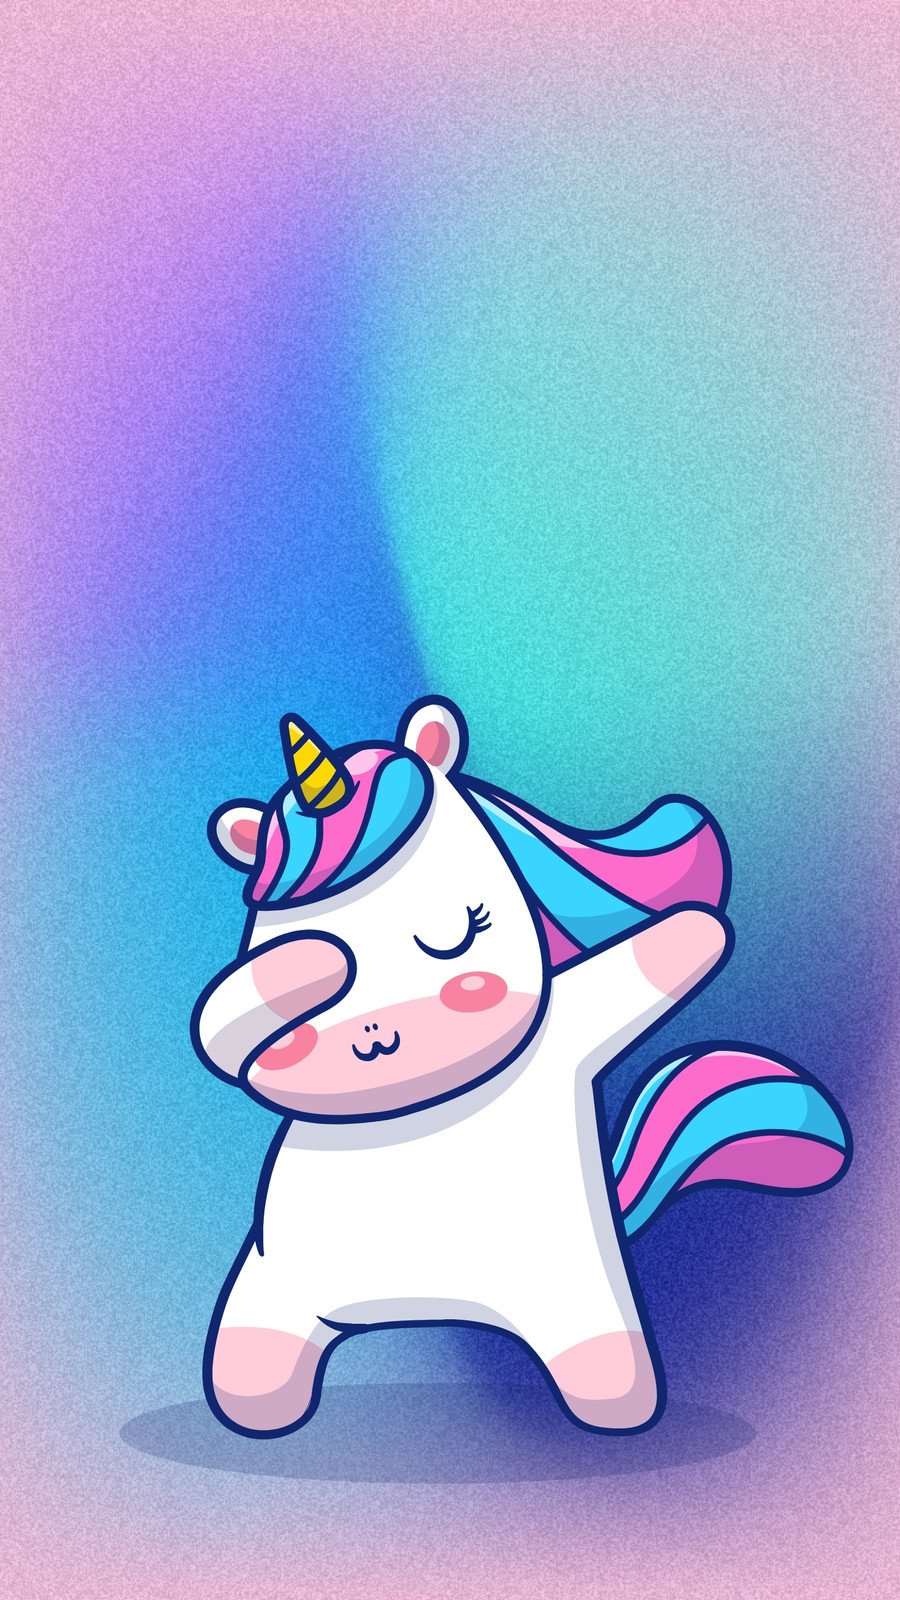 Free and customizable unicorn templates